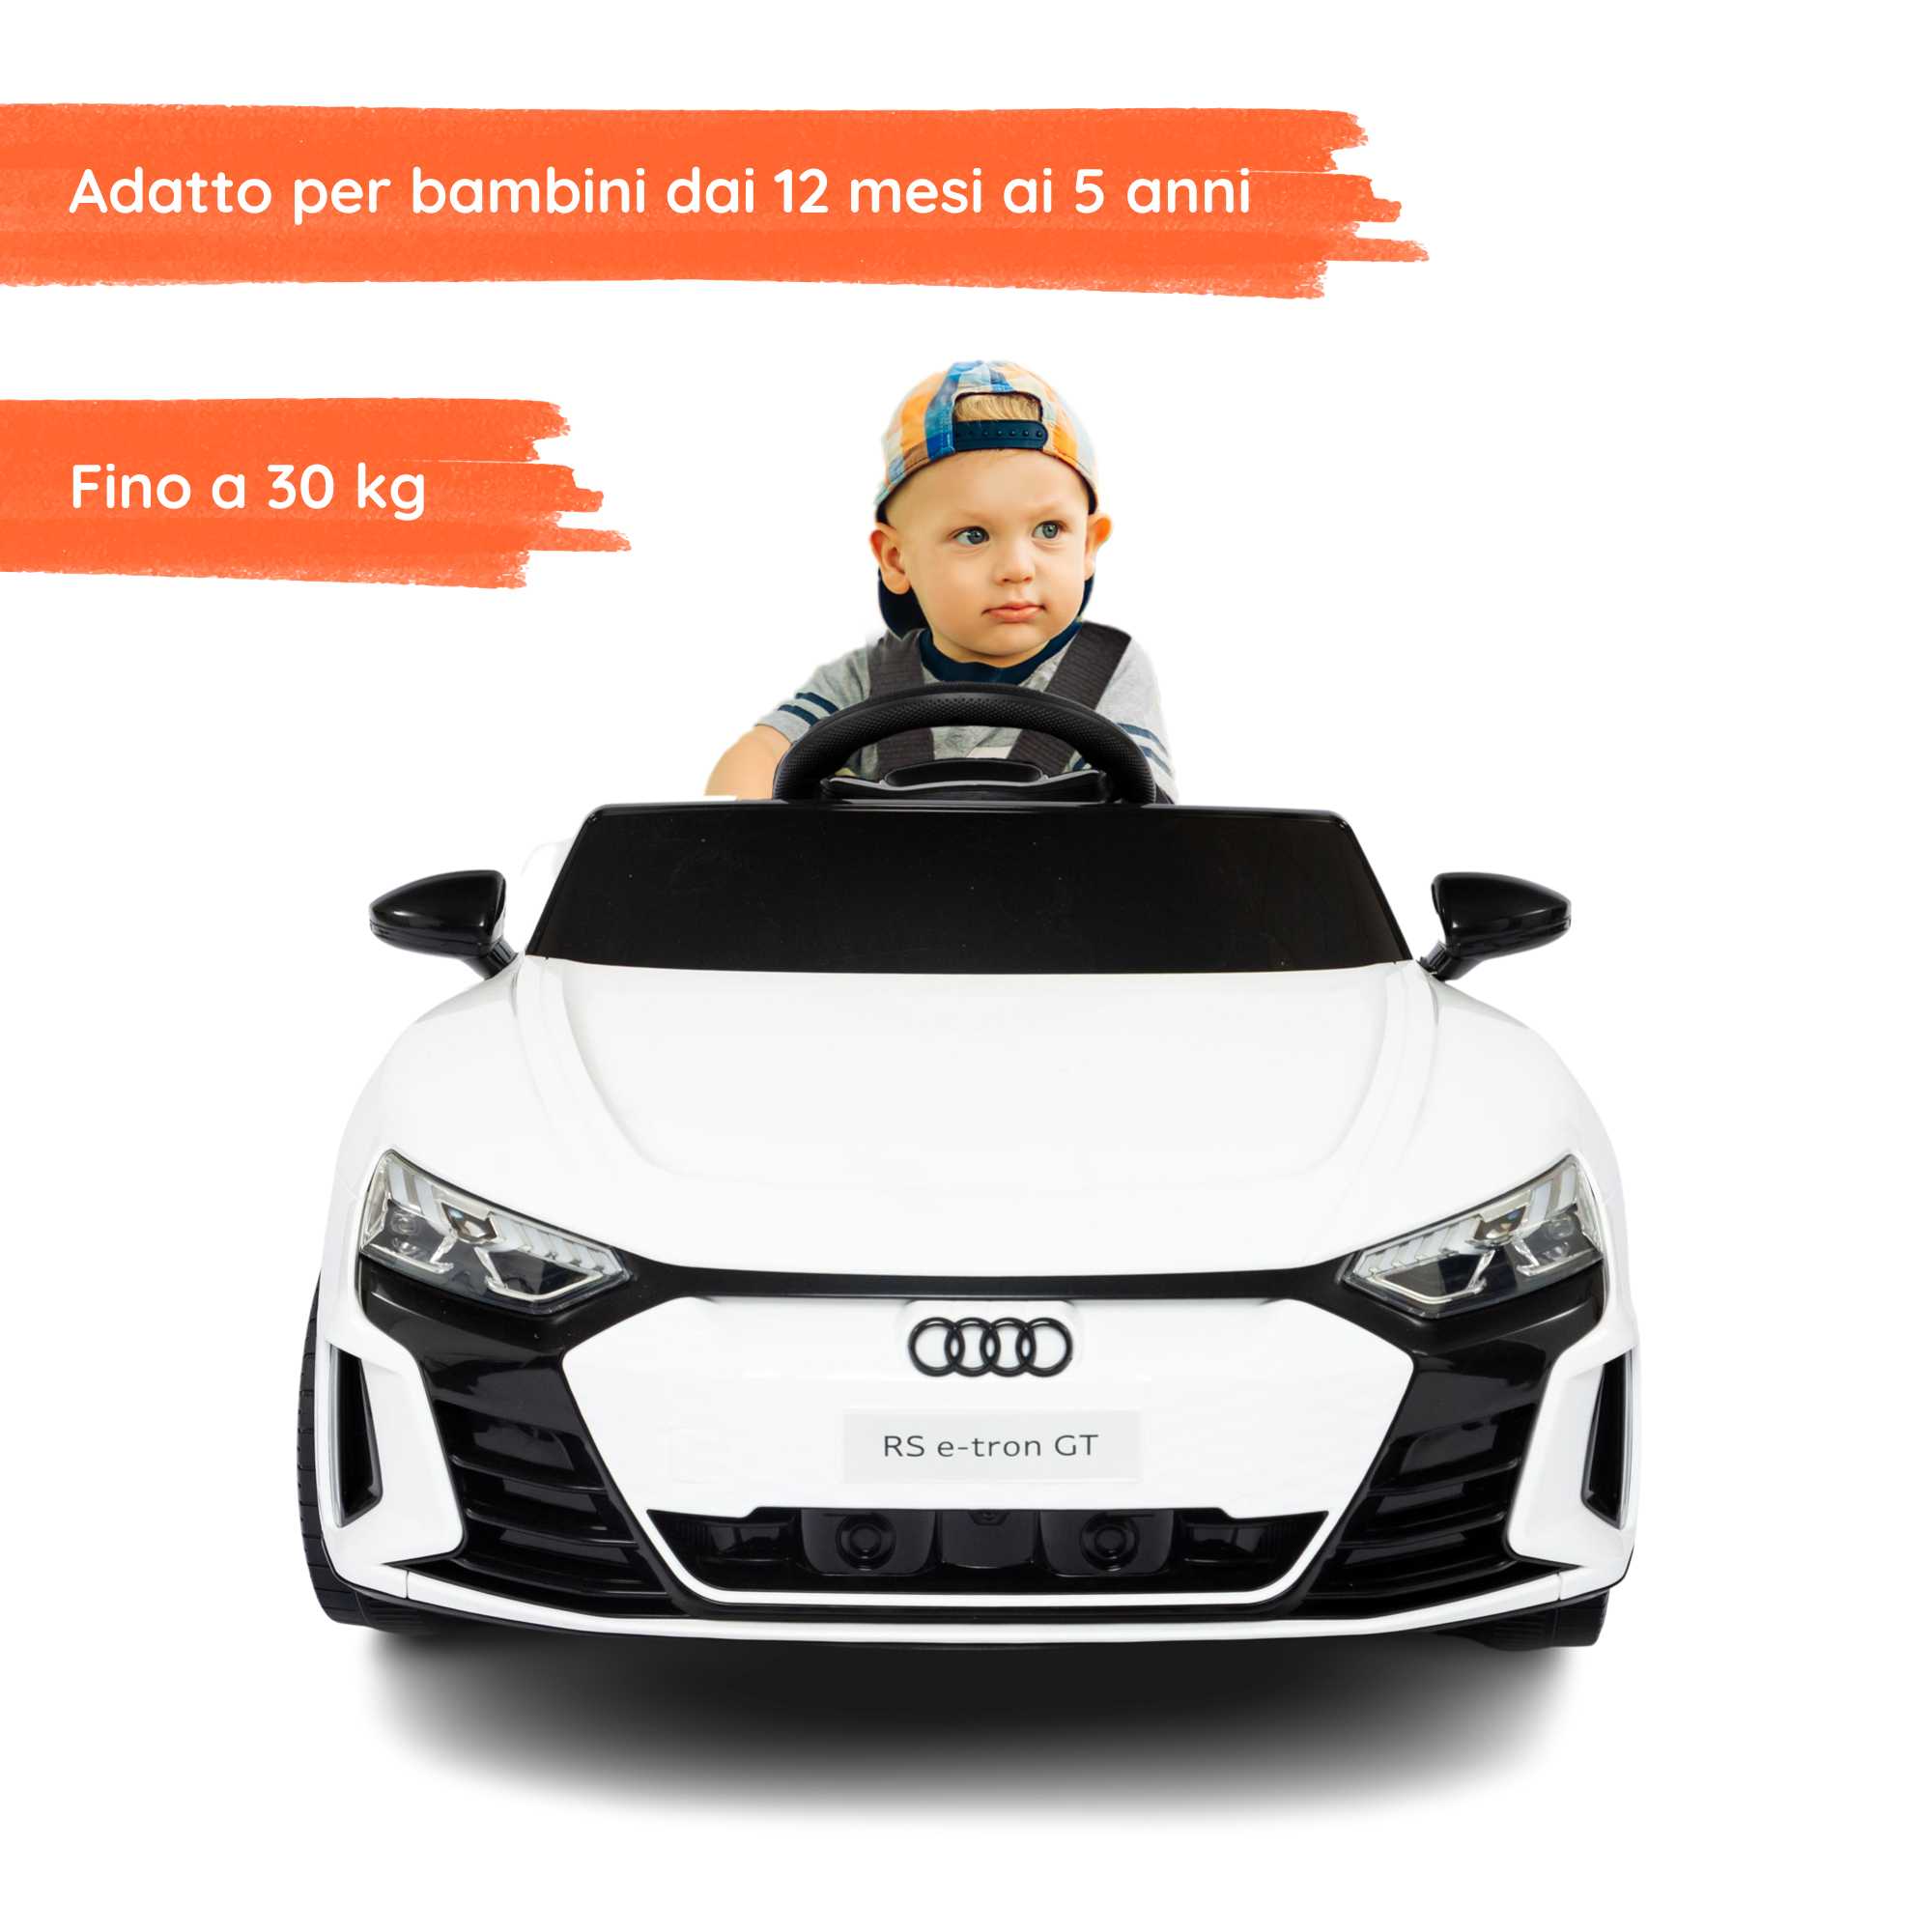 Audi Rs Etron bianca - età